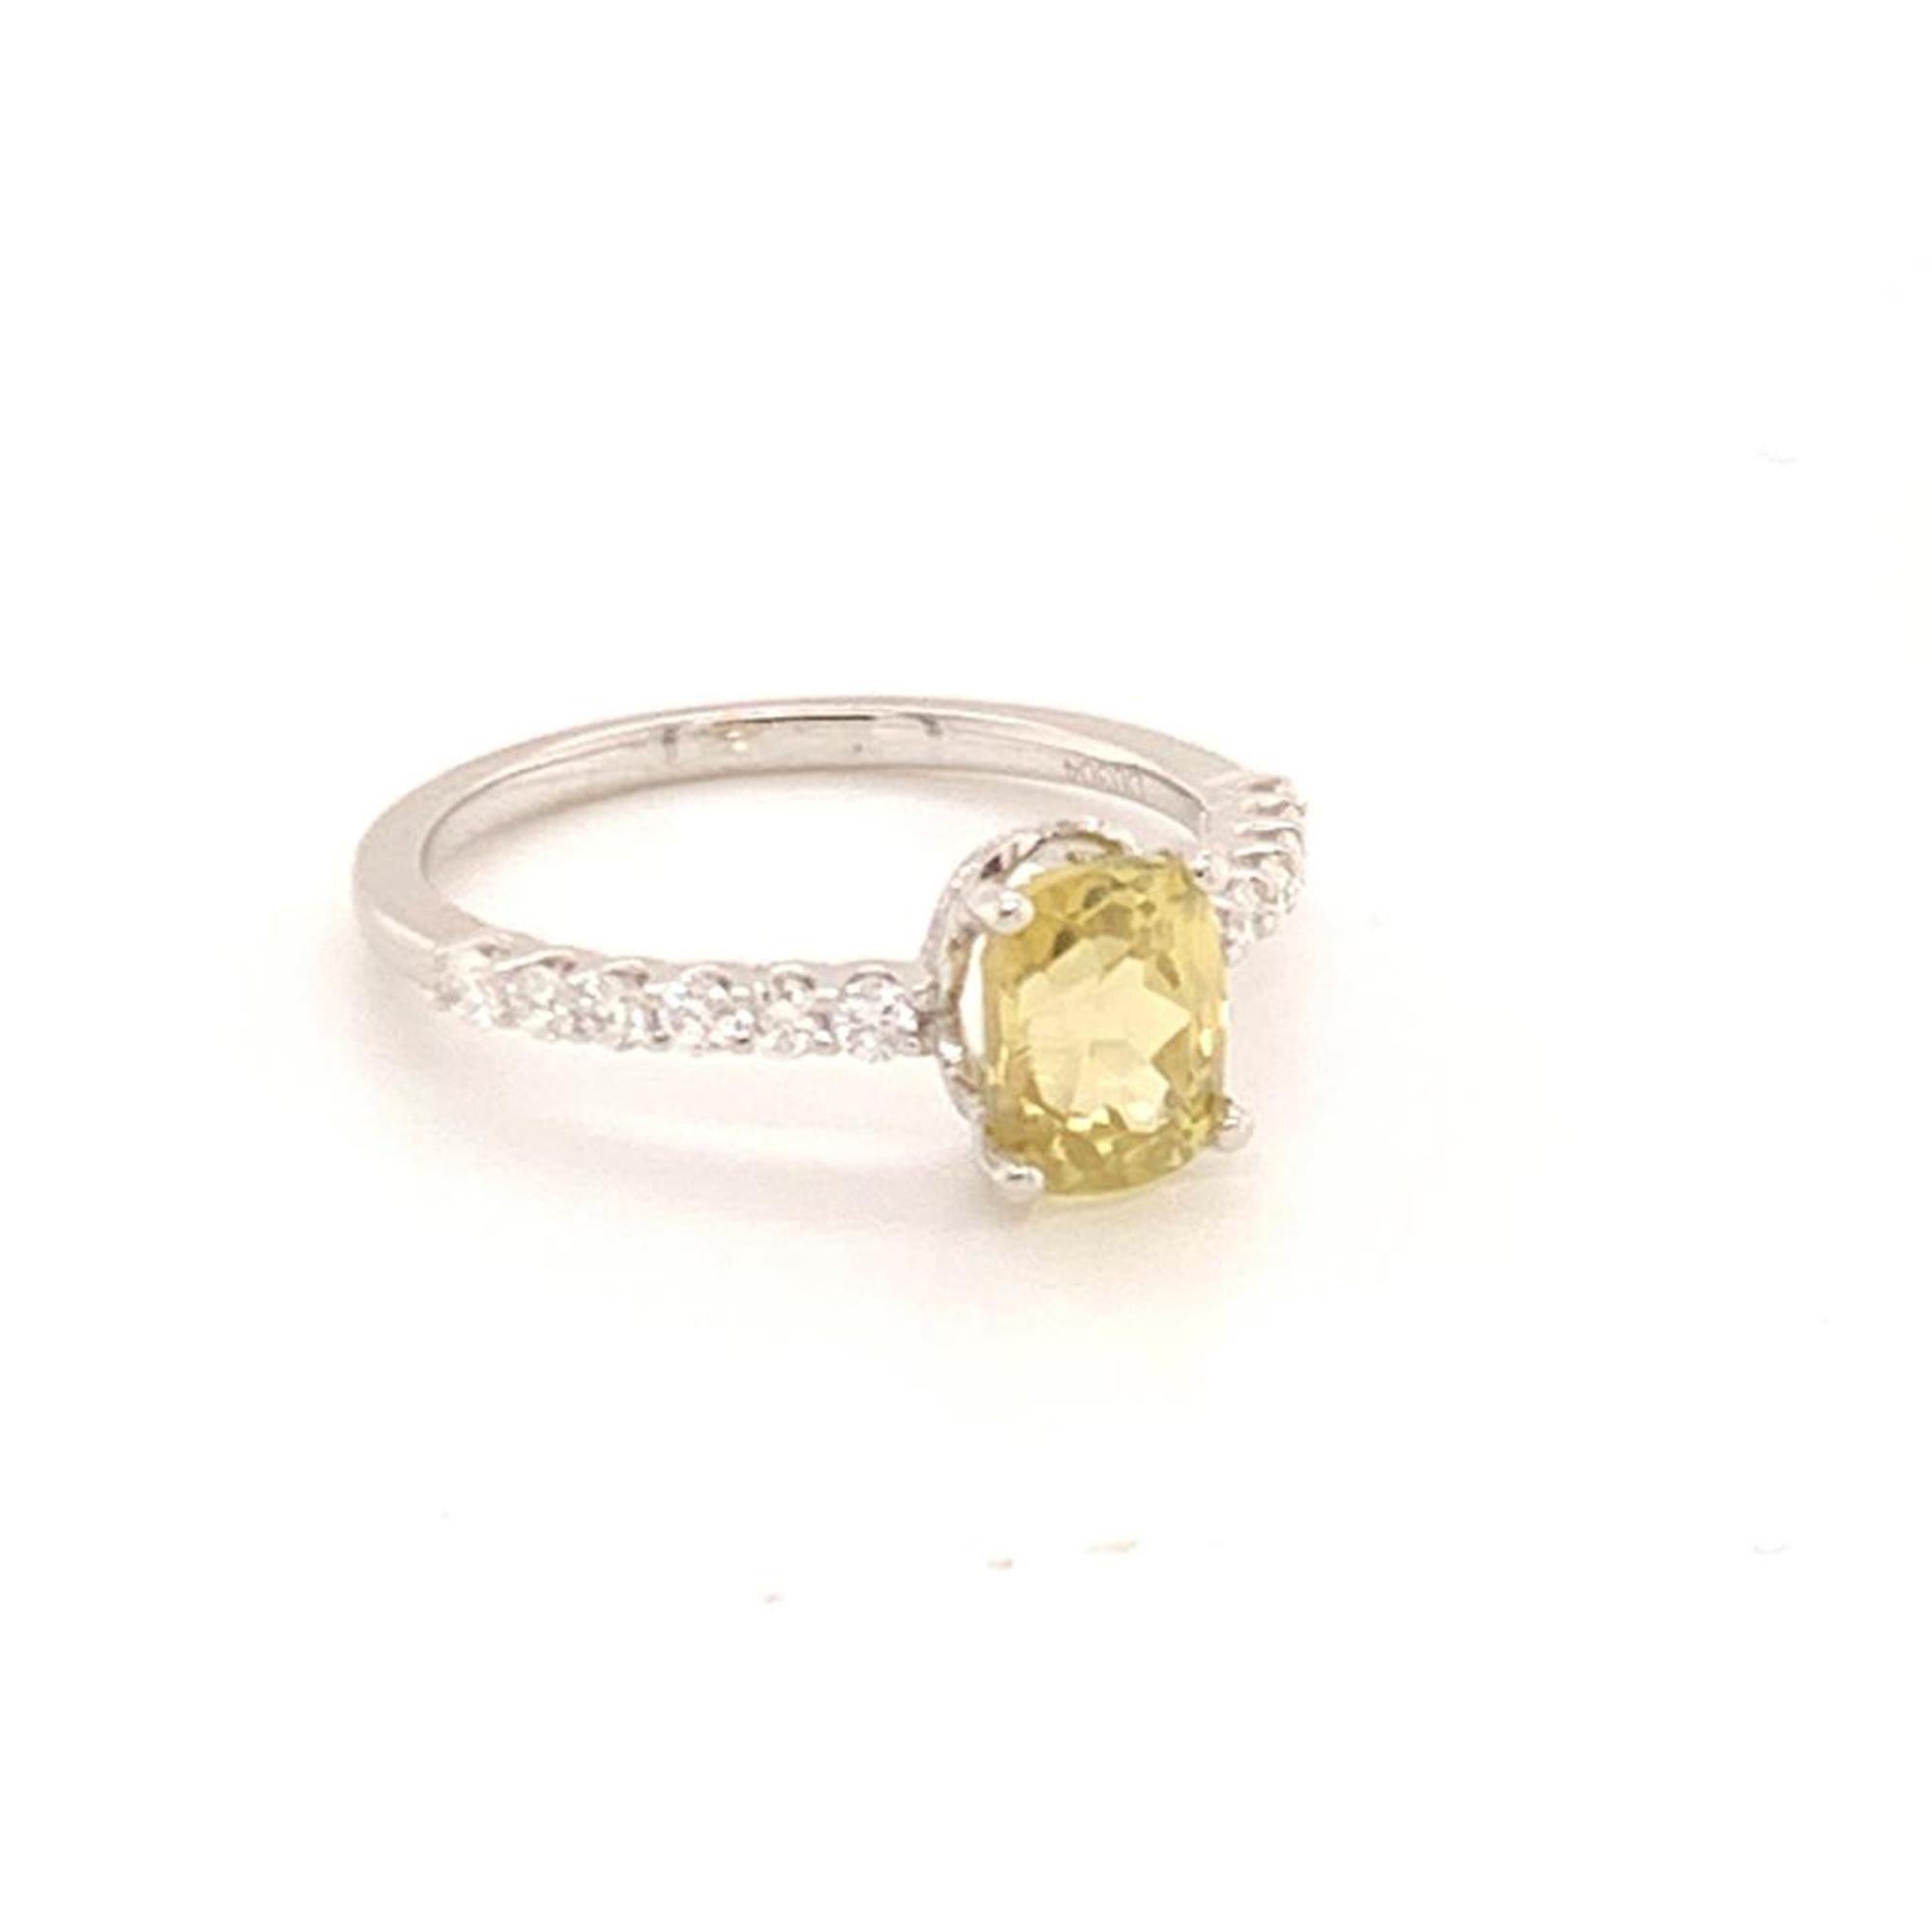 Cushion Cut Diamond Yellow Sapphire Ring 18k Gold 1.6 Ct Certified 